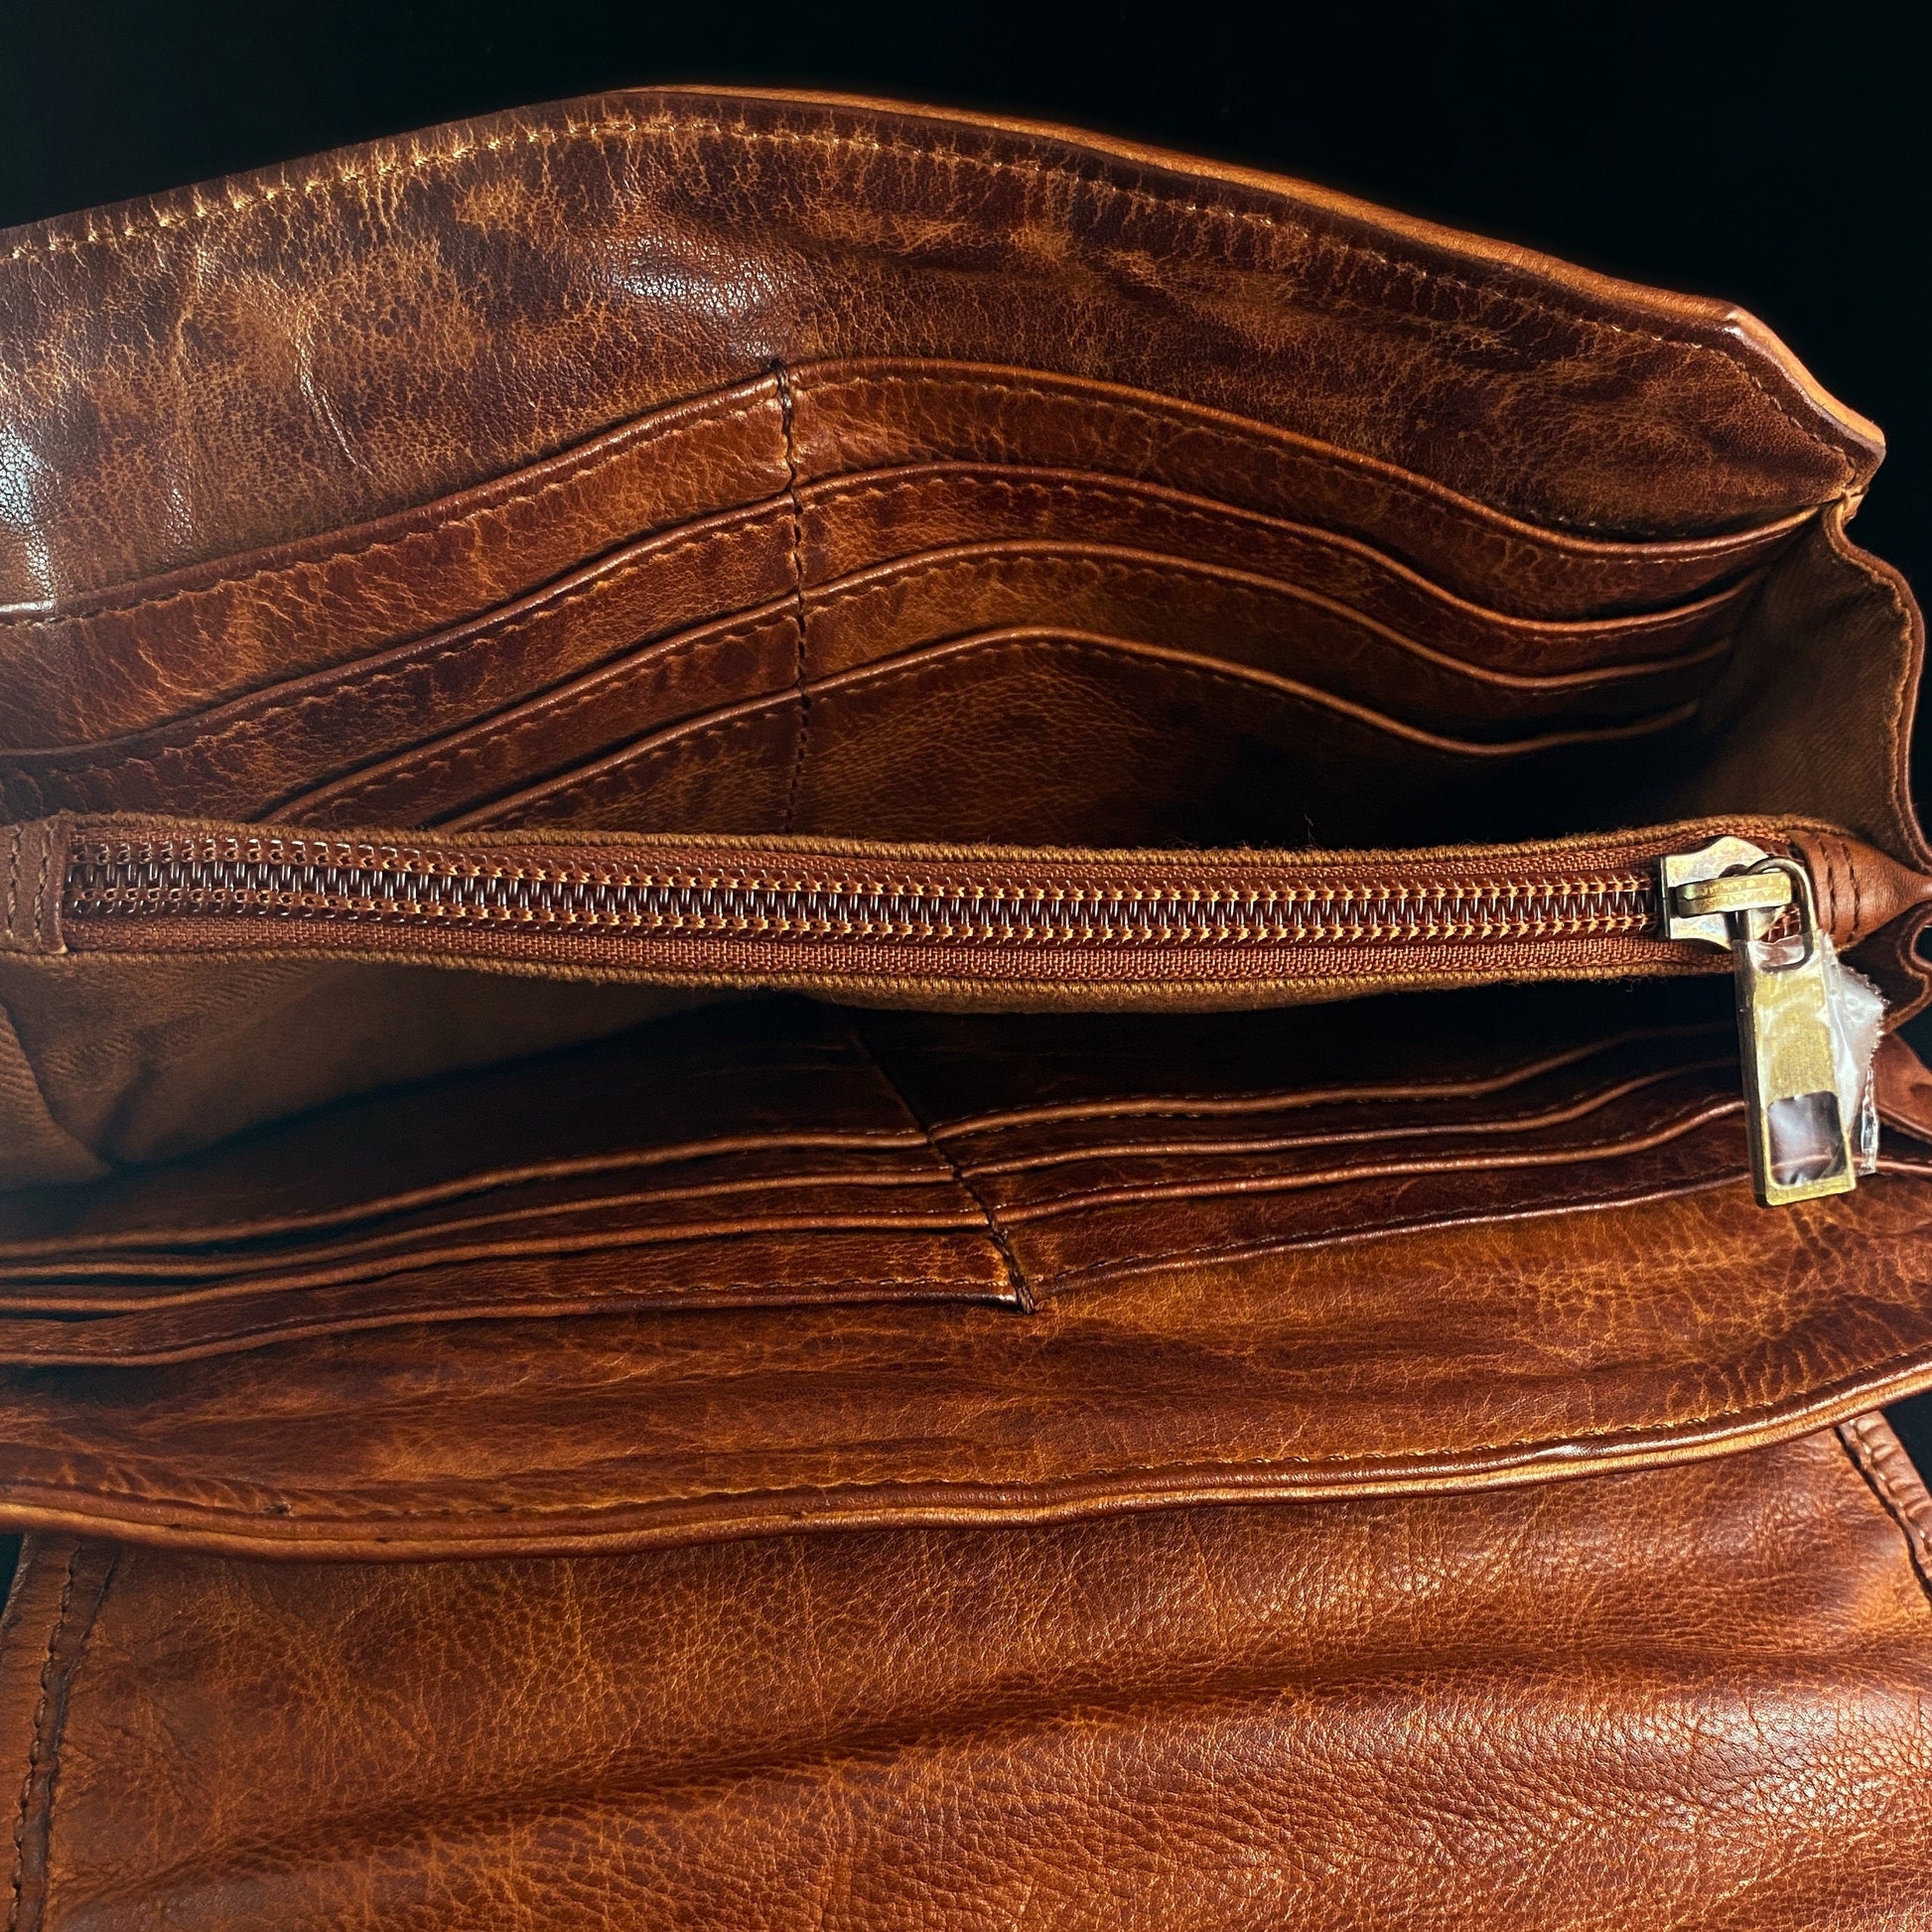 Genuine Leather Handbag - Cognac Brown, Woven Detail